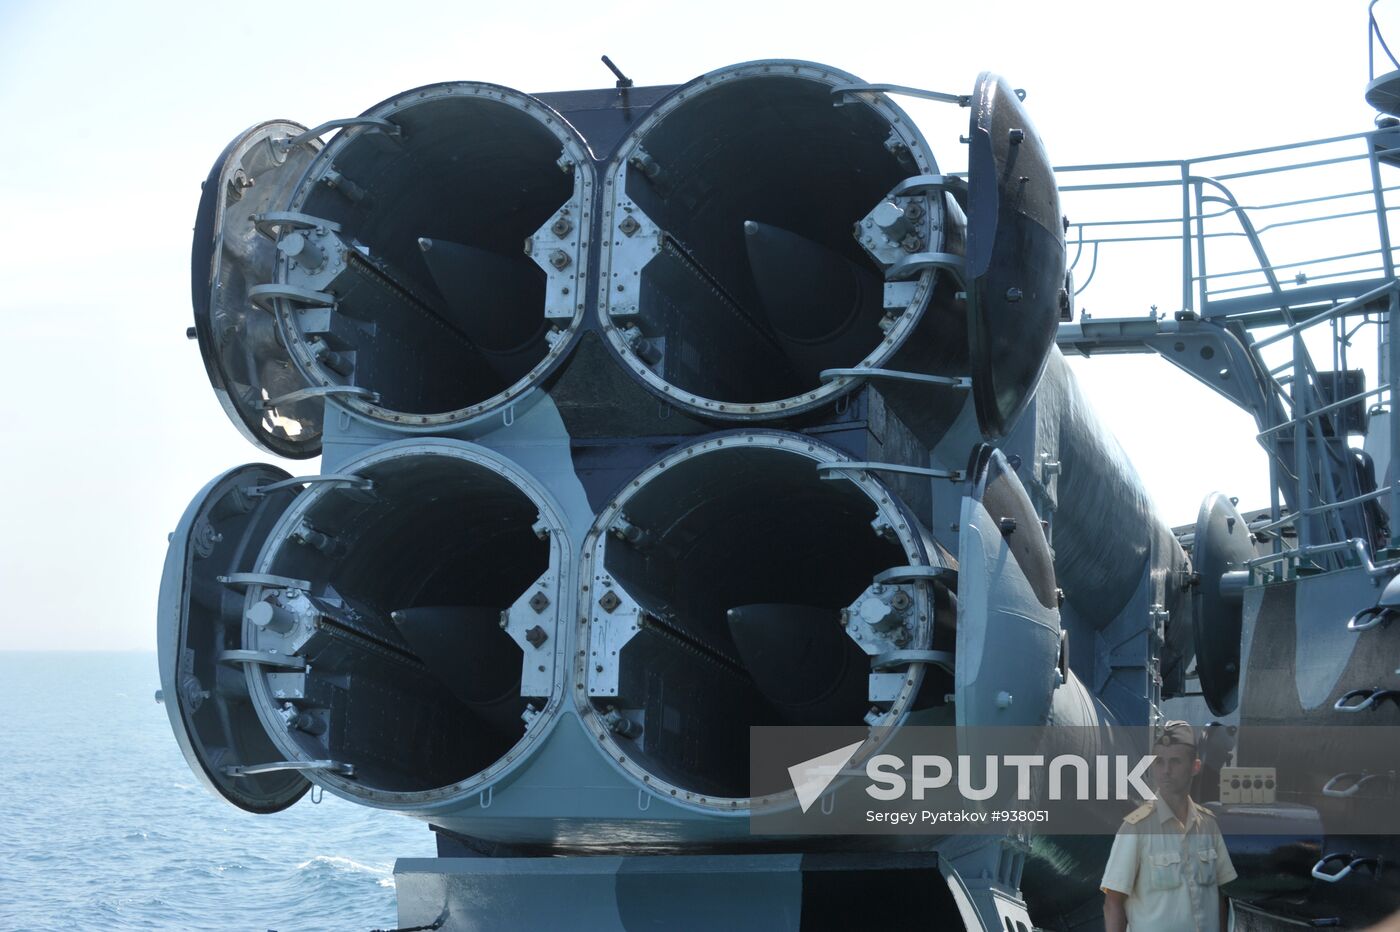 Cruise missiles on rocket ship hovercraft (RKVP) "Samum"